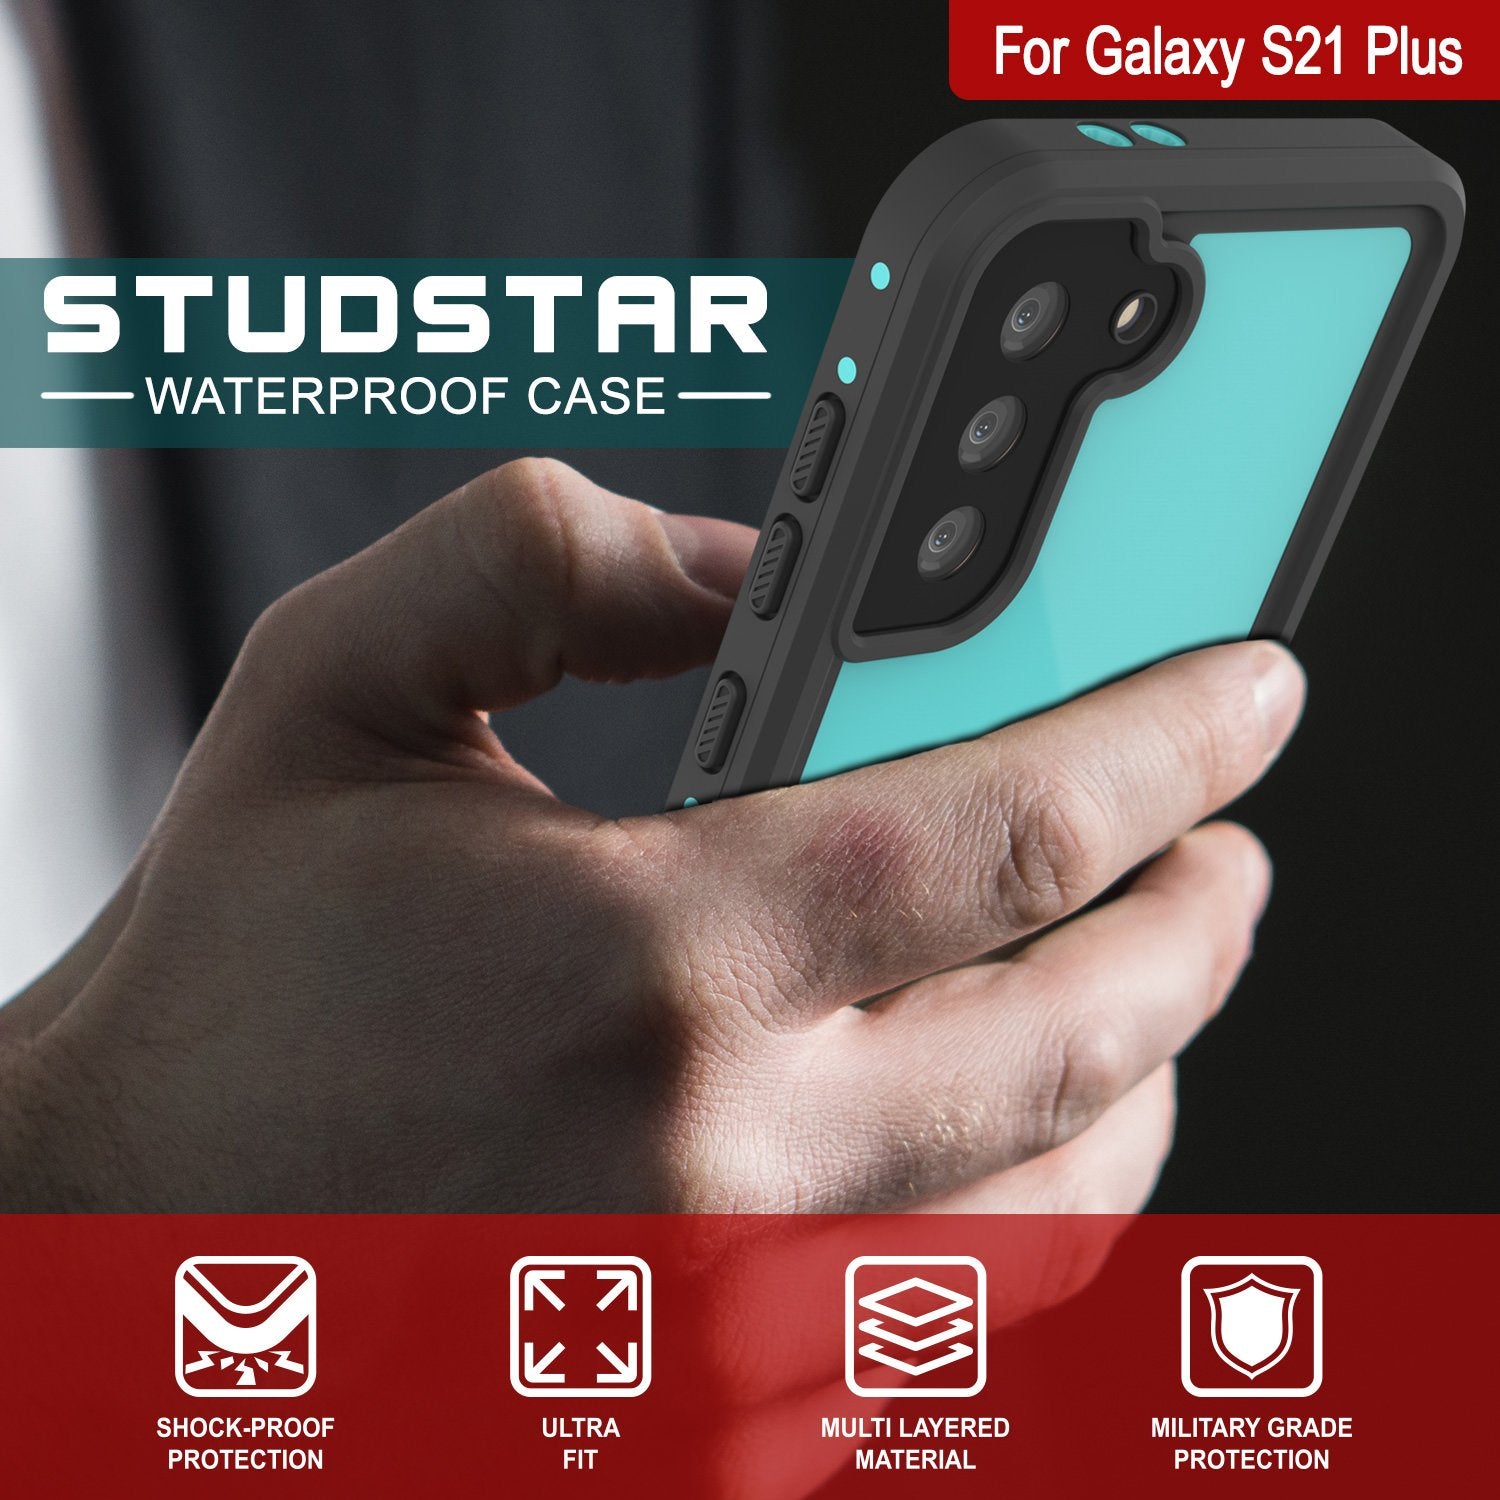 Galaxy S21+ Plus Waterproof Case PunkCase StudStar Teal Thin 6.6ft Underwater IP68 Shock/Snow Proof